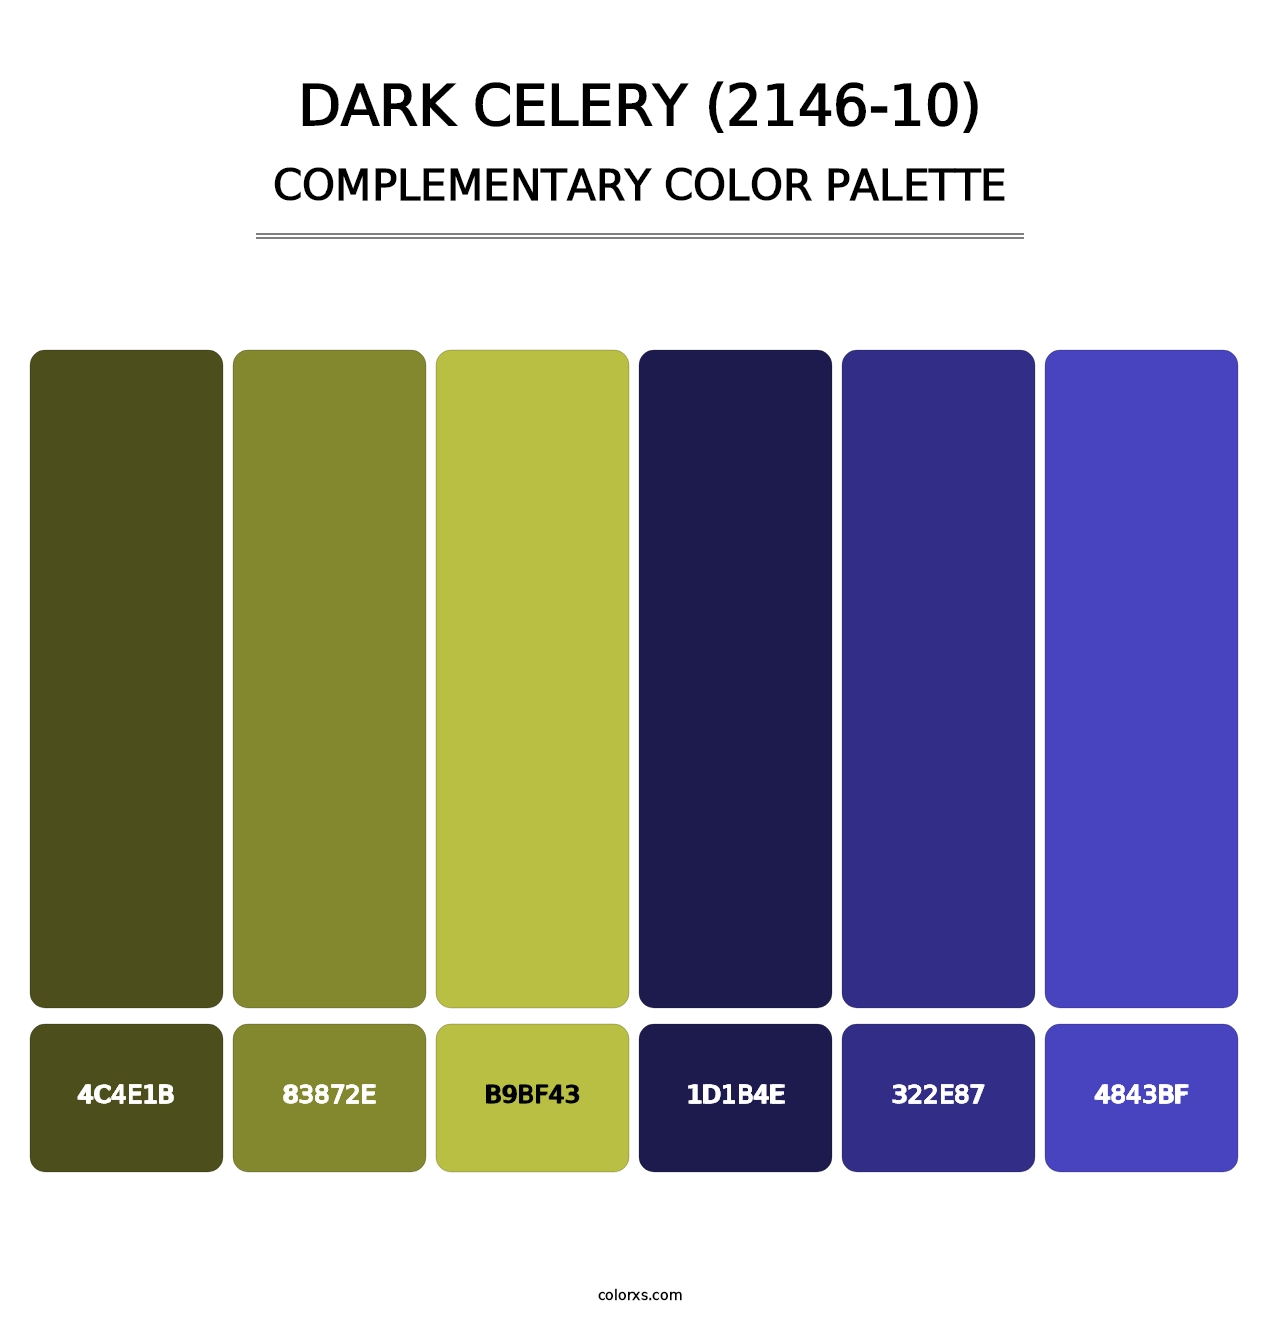 Dark Celery (2146-10) - Complementary Color Palette